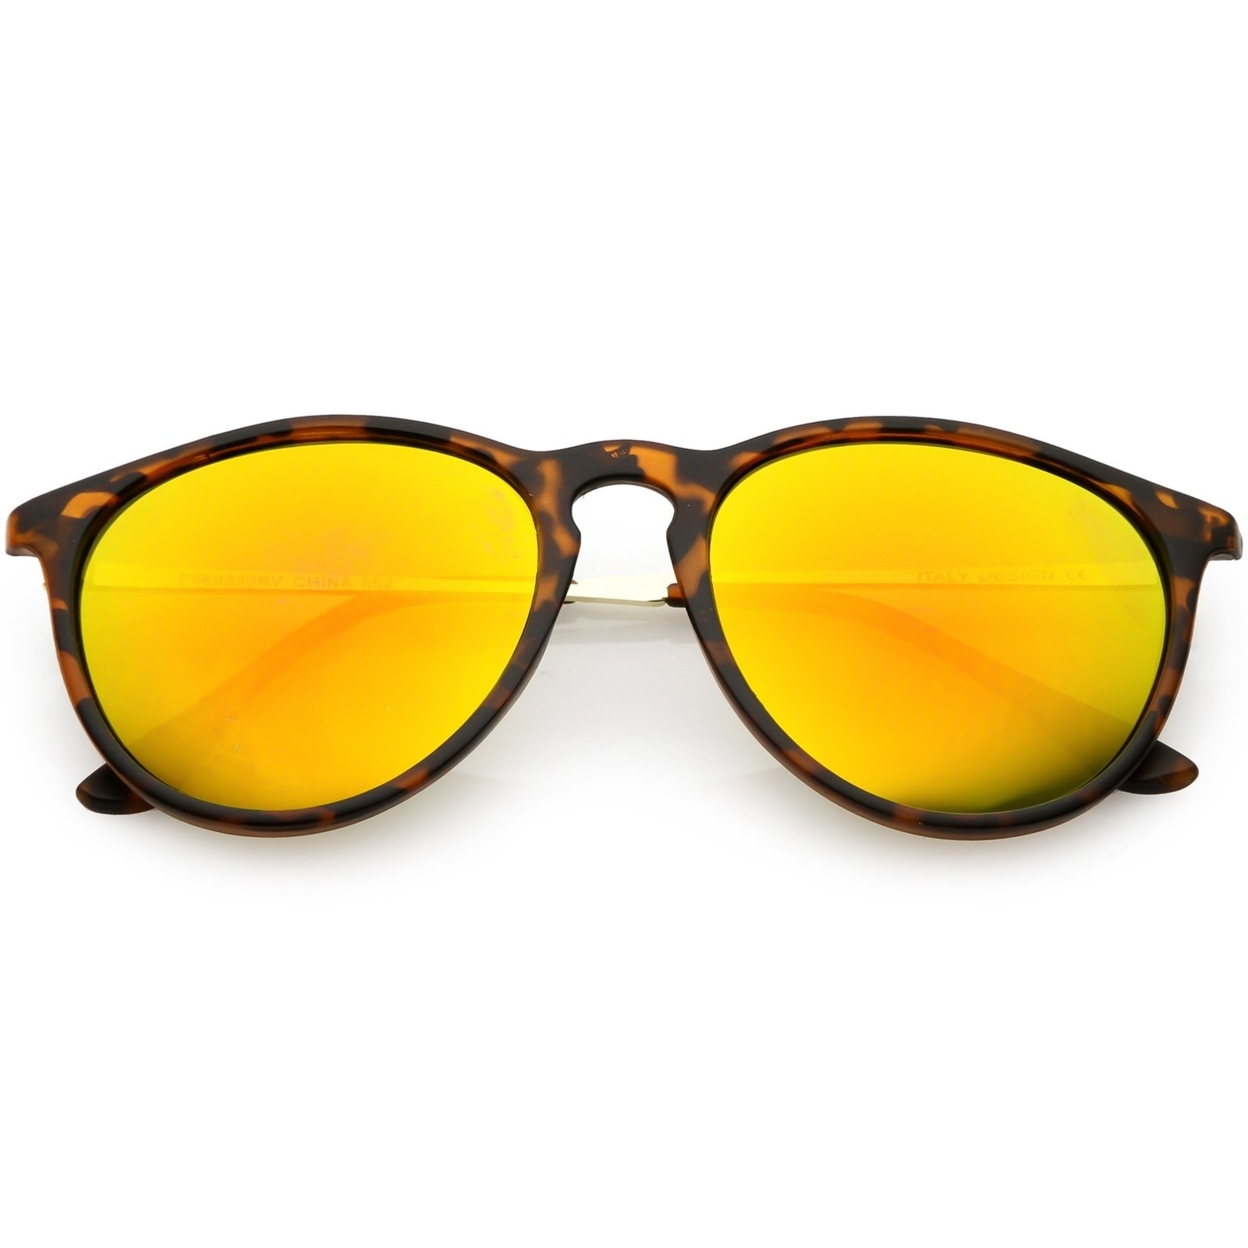 Modern Horn Rimmed Sunglasses Metal Arms Round Mirrored Lens 52mm - Matte Tortoise Gold / Orange Yellow Mirror